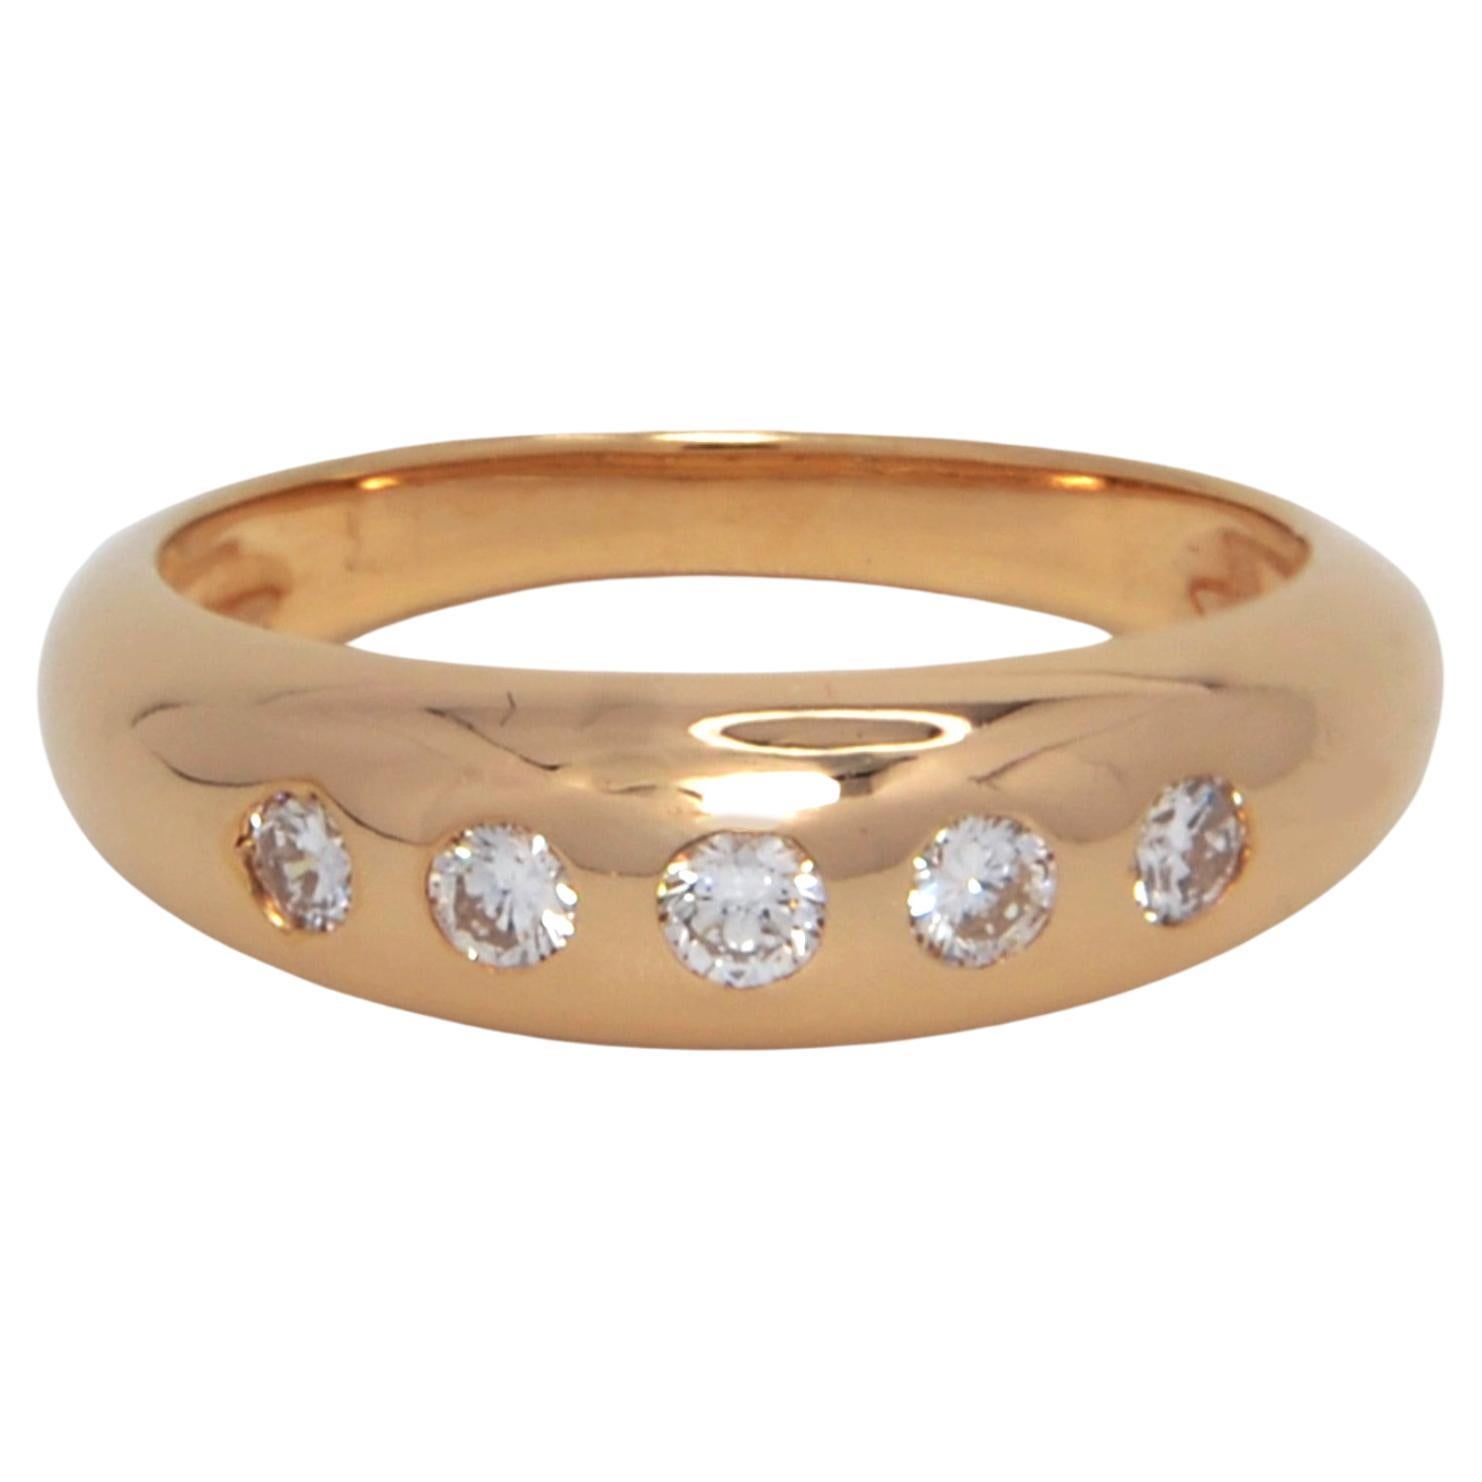 Fem Ring, 5 Stone Diamond Ring in 14k Yellow Gold